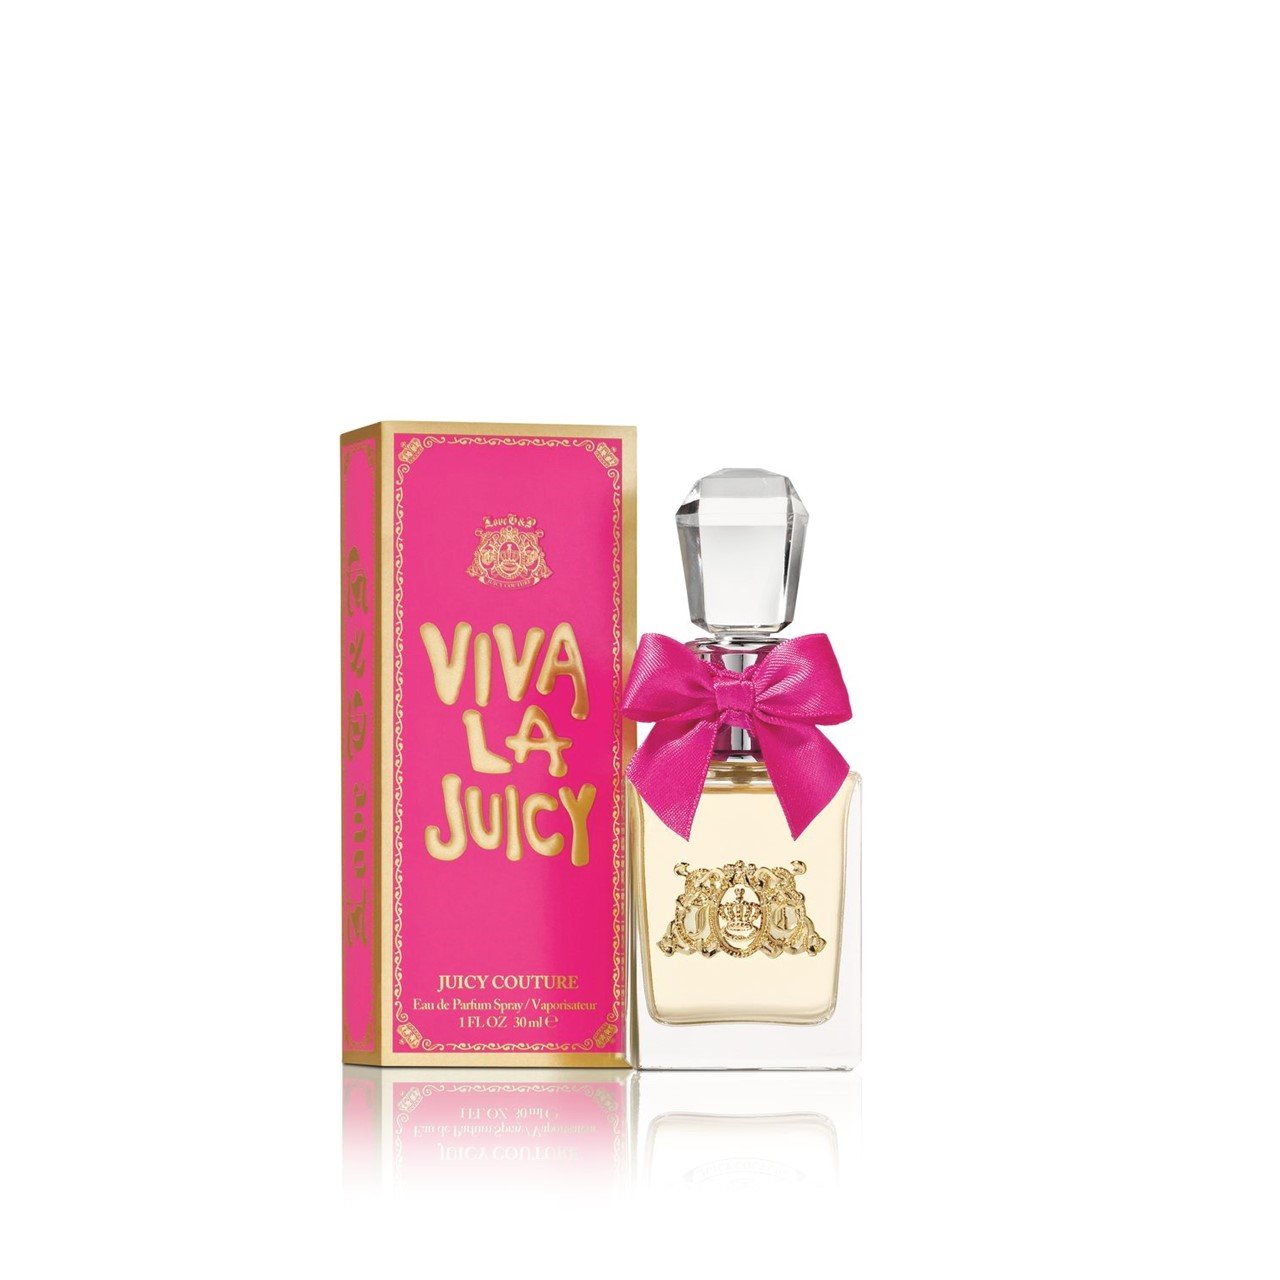 Juicy Couture Eau de Parfum Spray